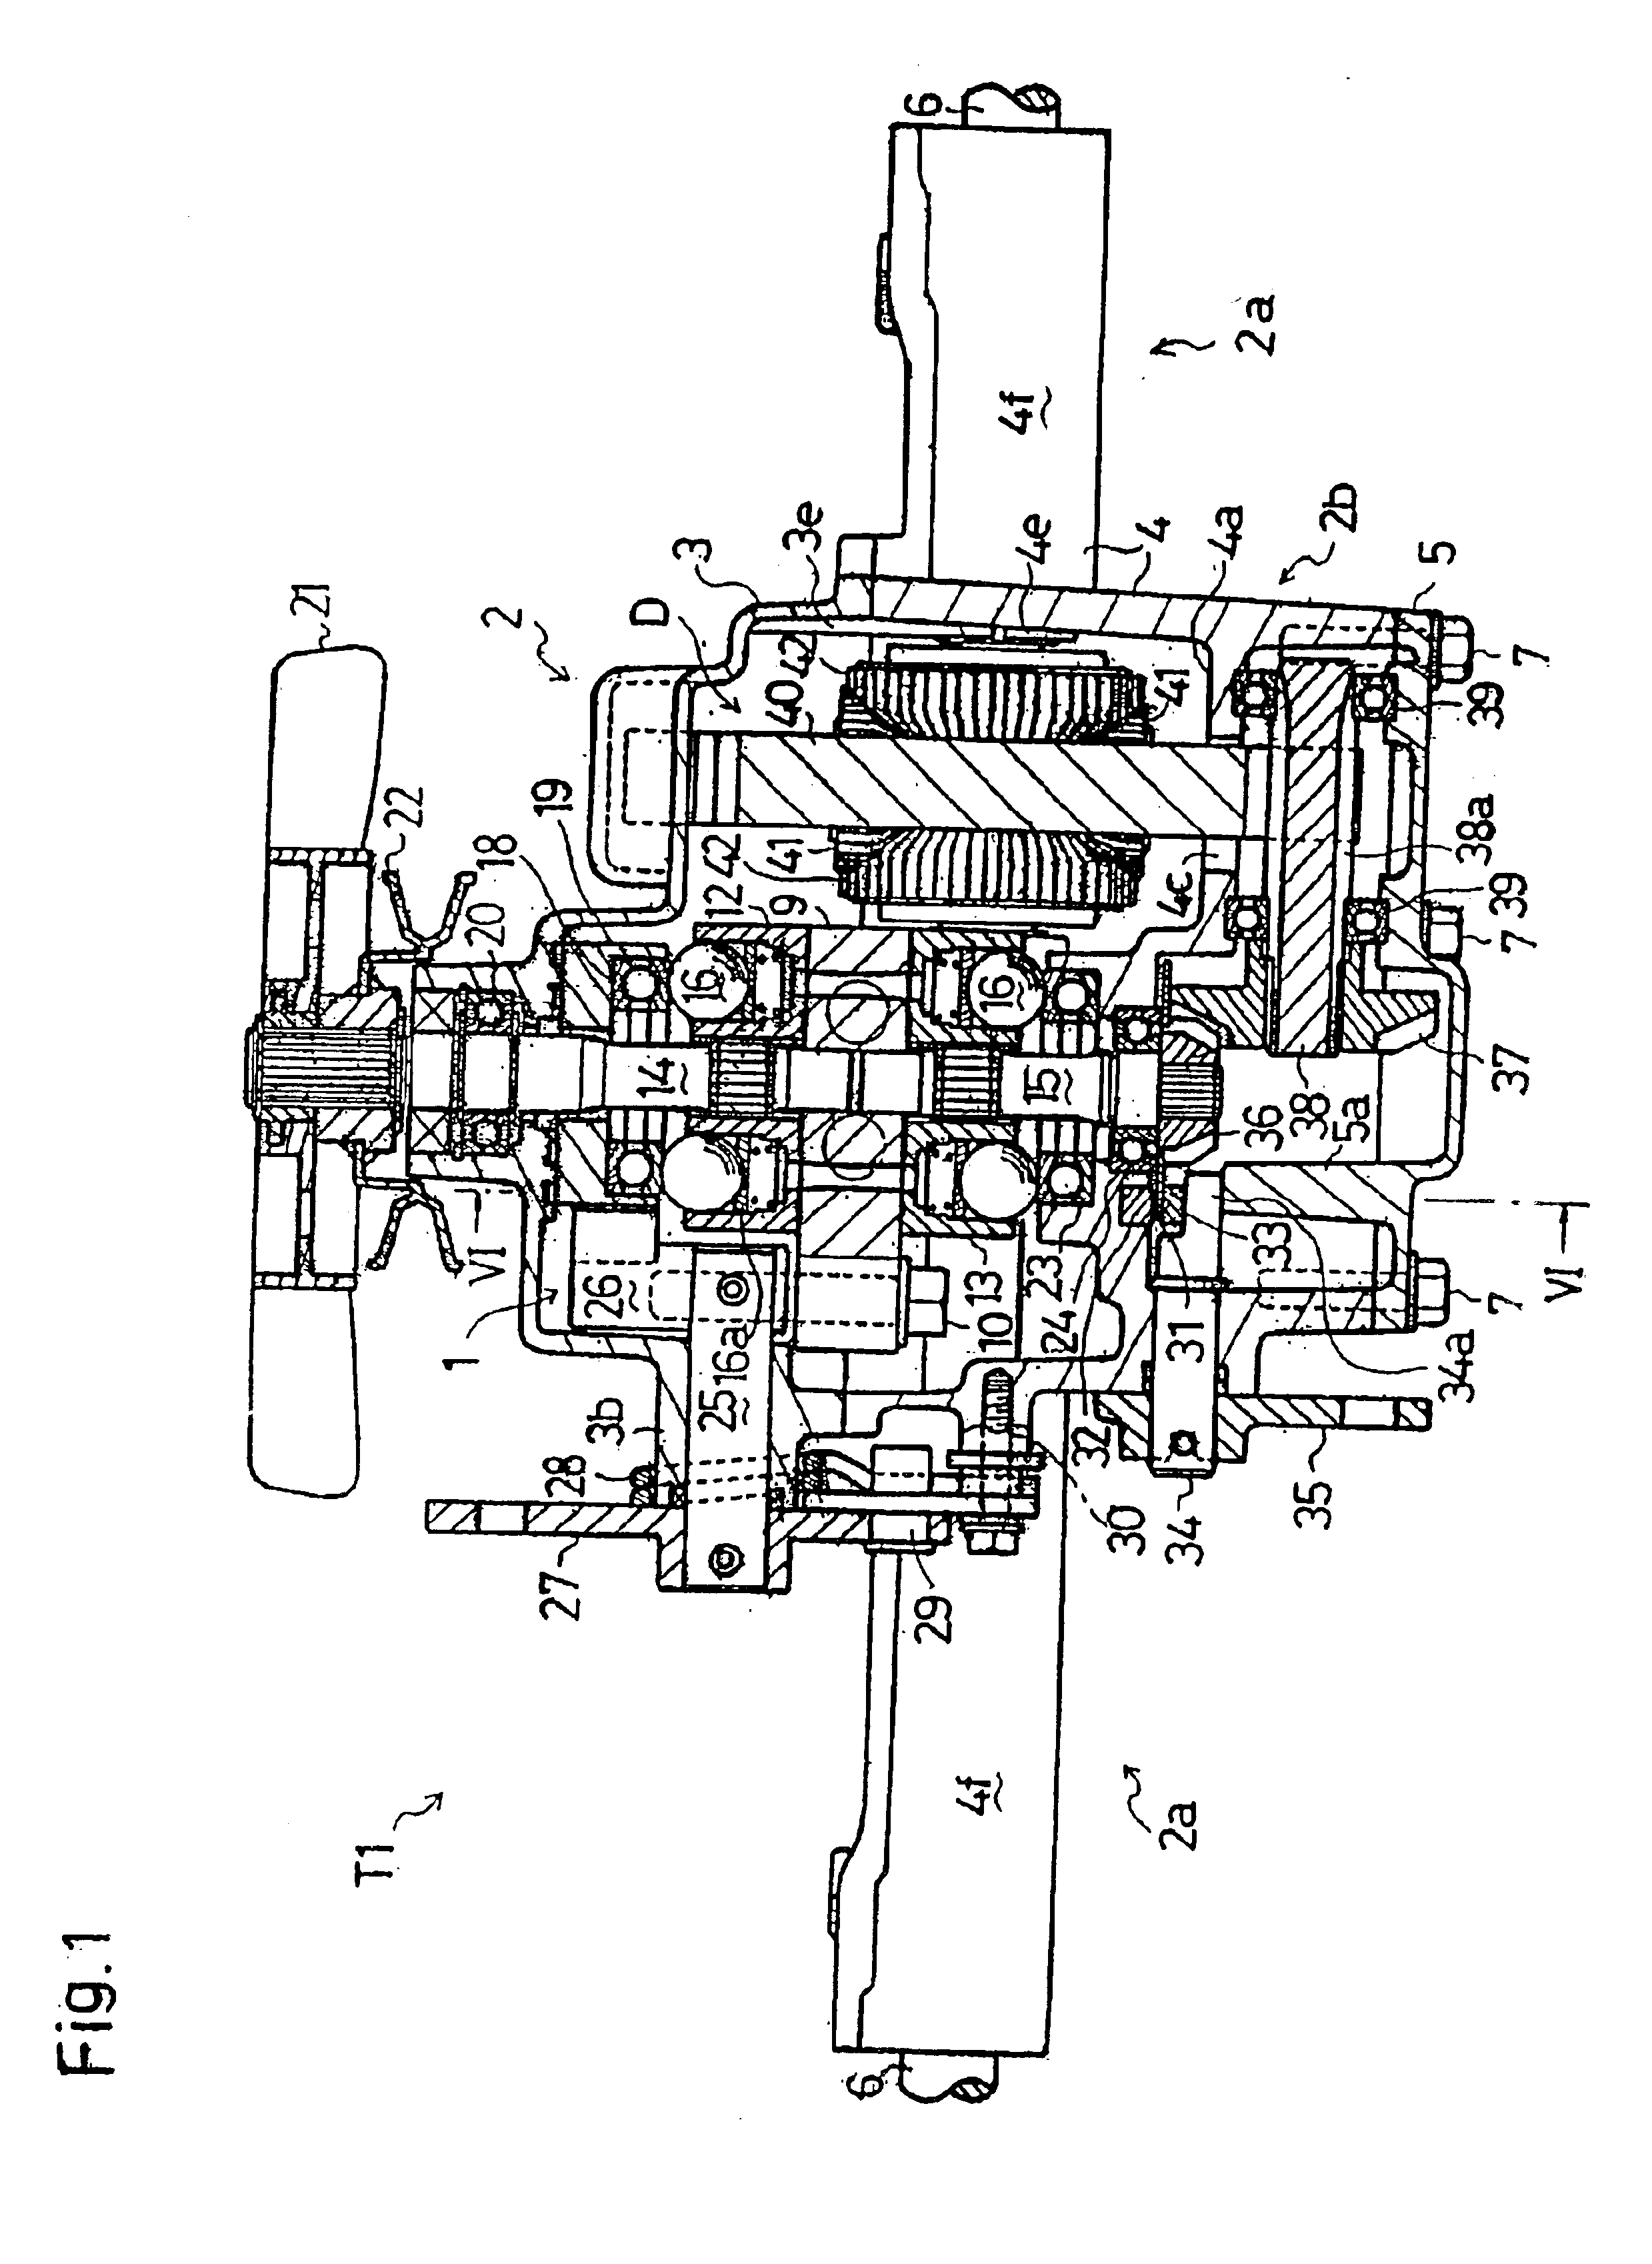 Hydrostatic transaxle apparatus